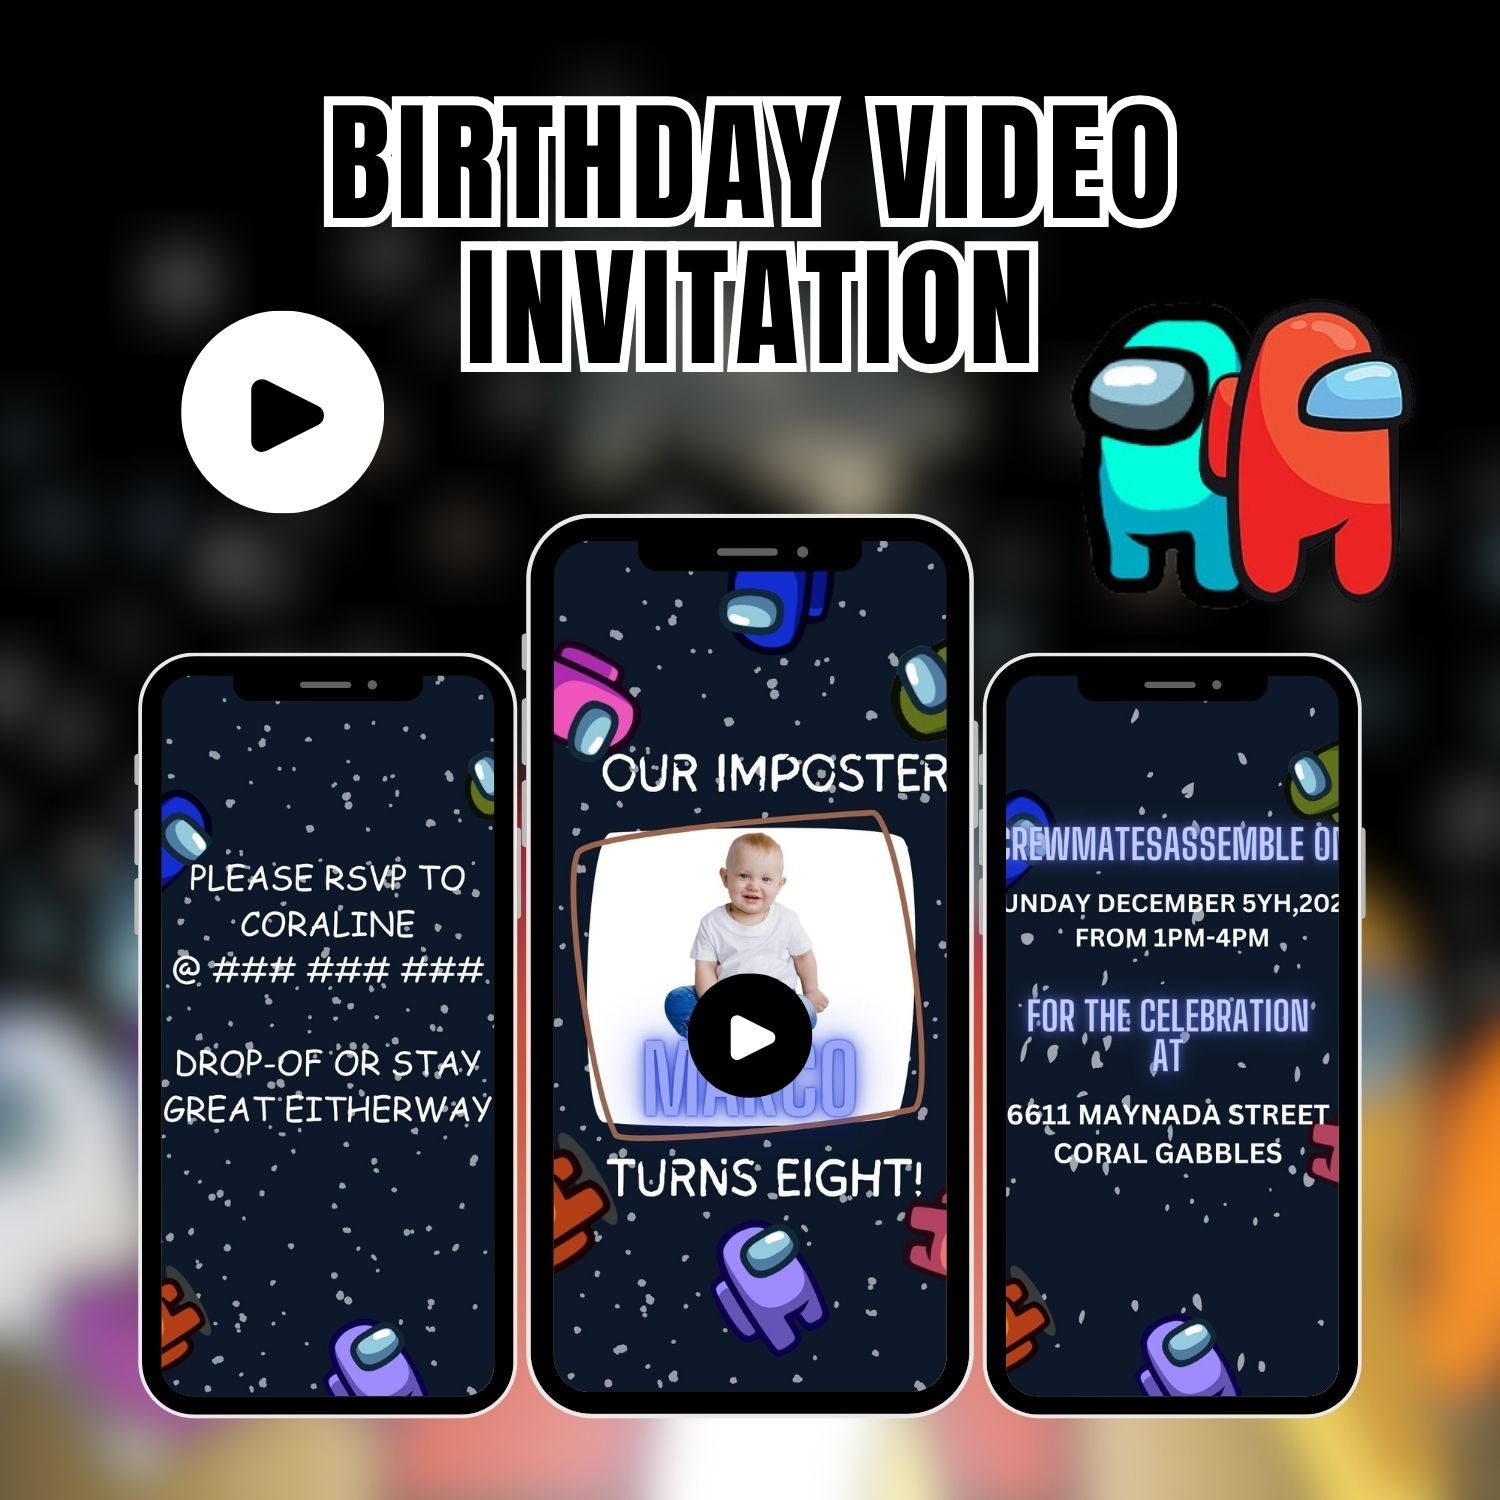 Animated Among Us Birthday Video Invitation | Customize & Send Online